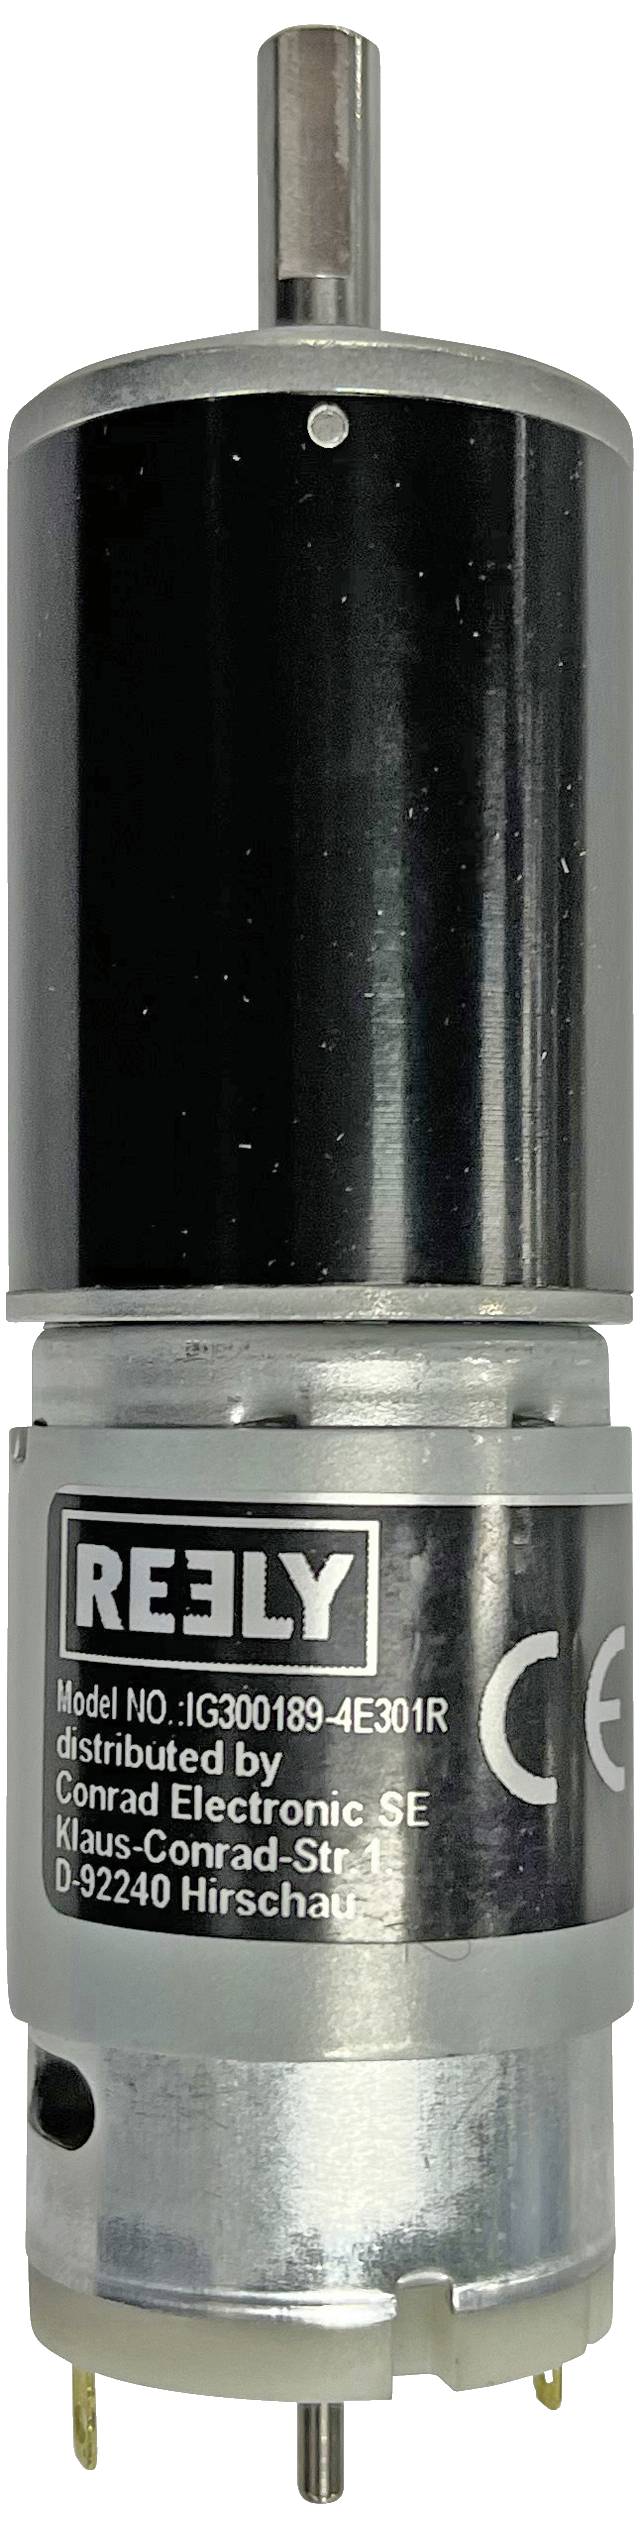 Reely RE-7842834 Getriebemotor 12 V 1:516 kaufen